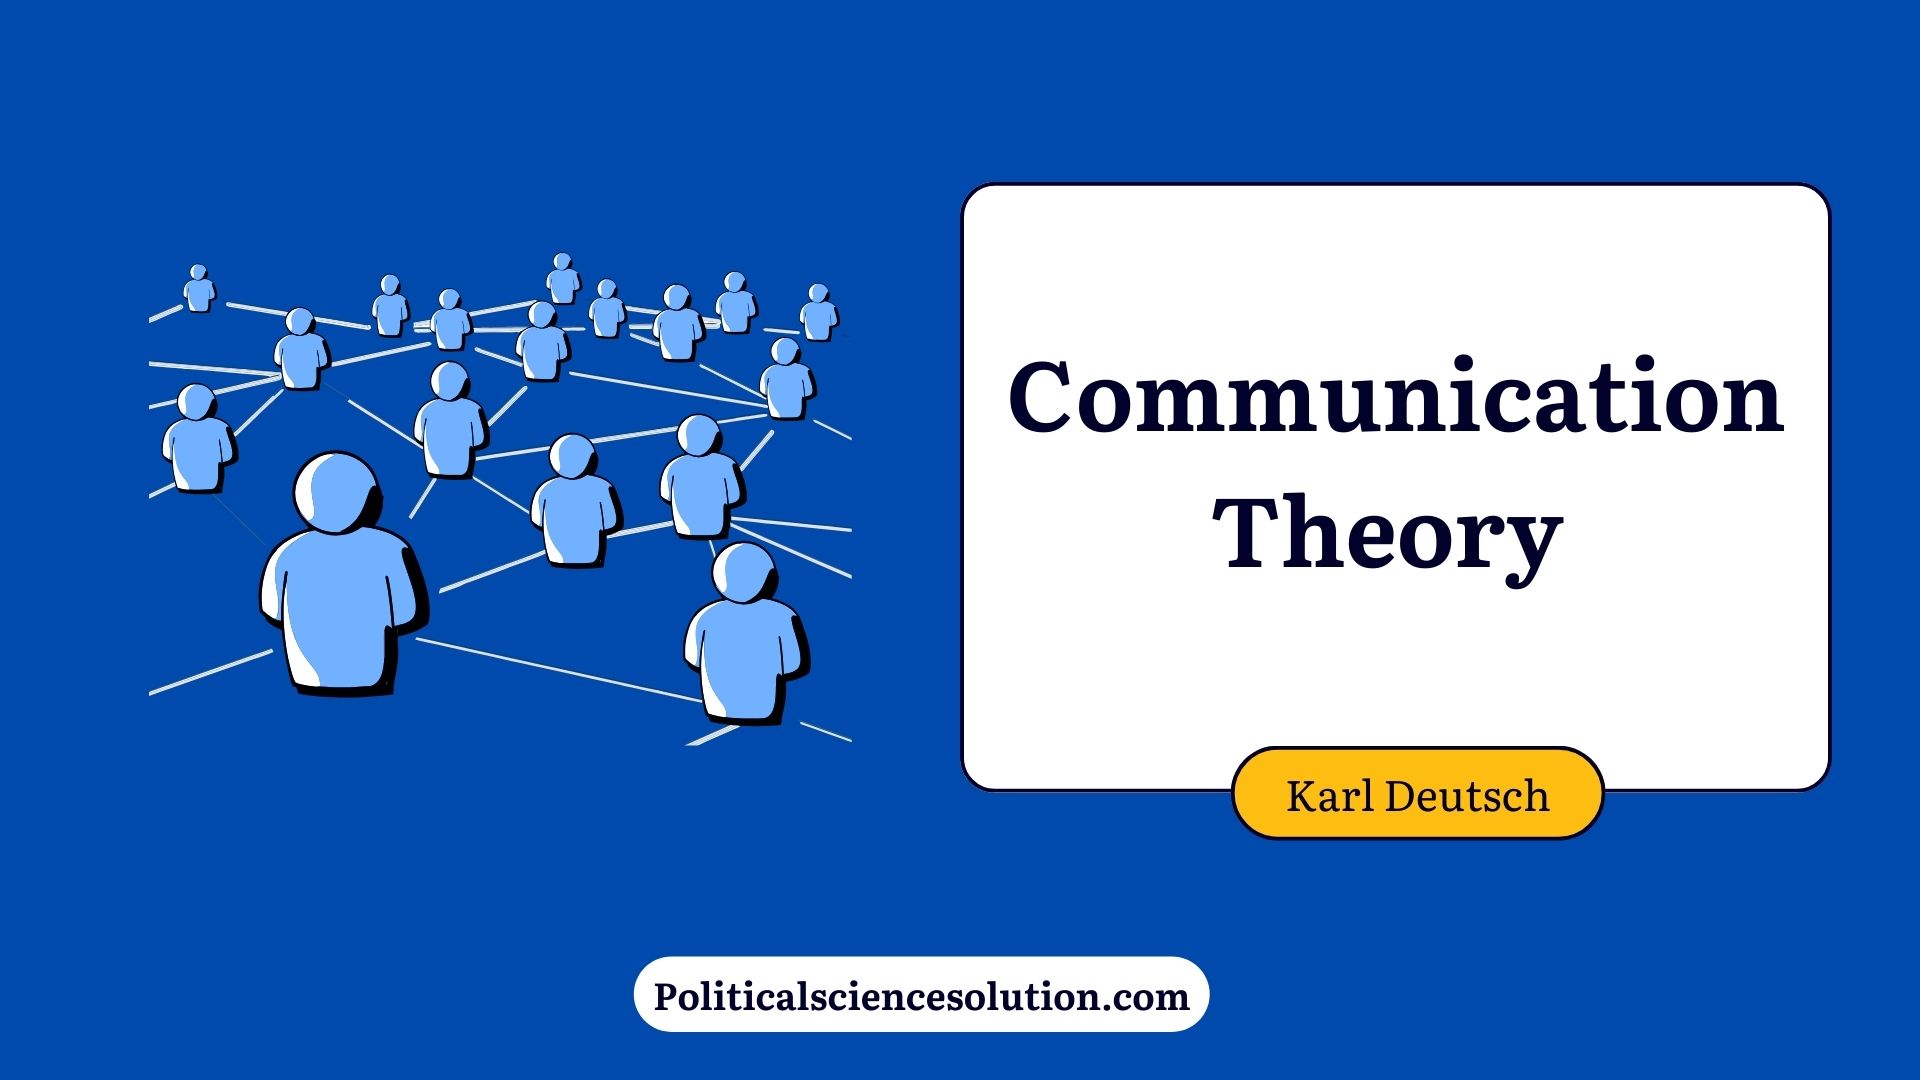 Communication theory by Karl Deutsch